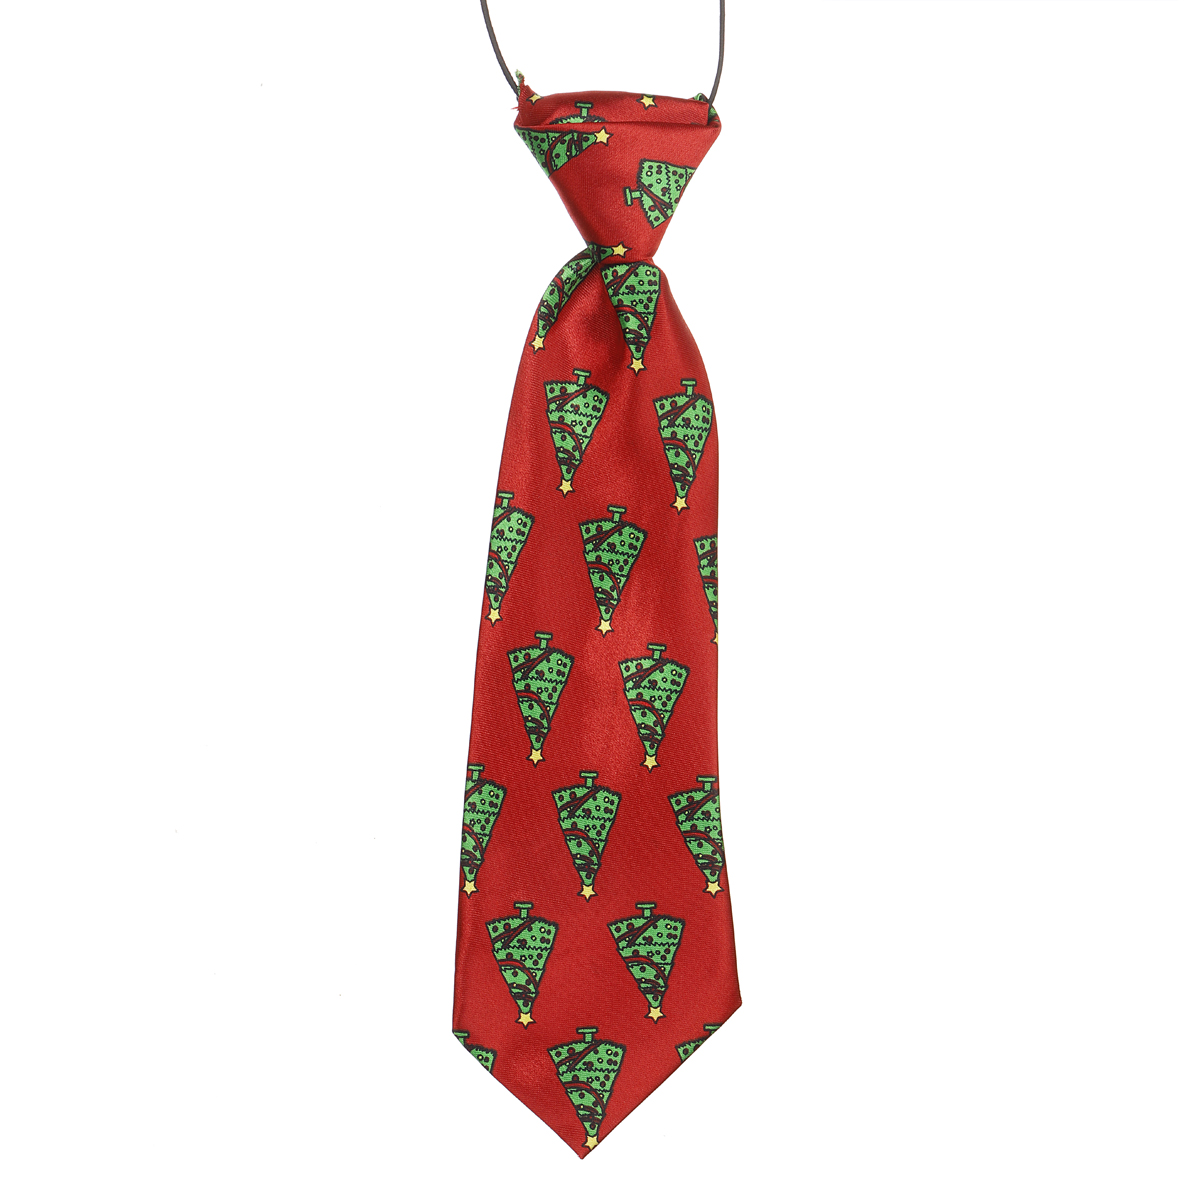 10-Pcs-Pet-Dog-Cat-Bow-Ties-Adjustable-Pet-Costume-Necktie-Collar-Christmas-Party-Pet-Accessories-1865299-7